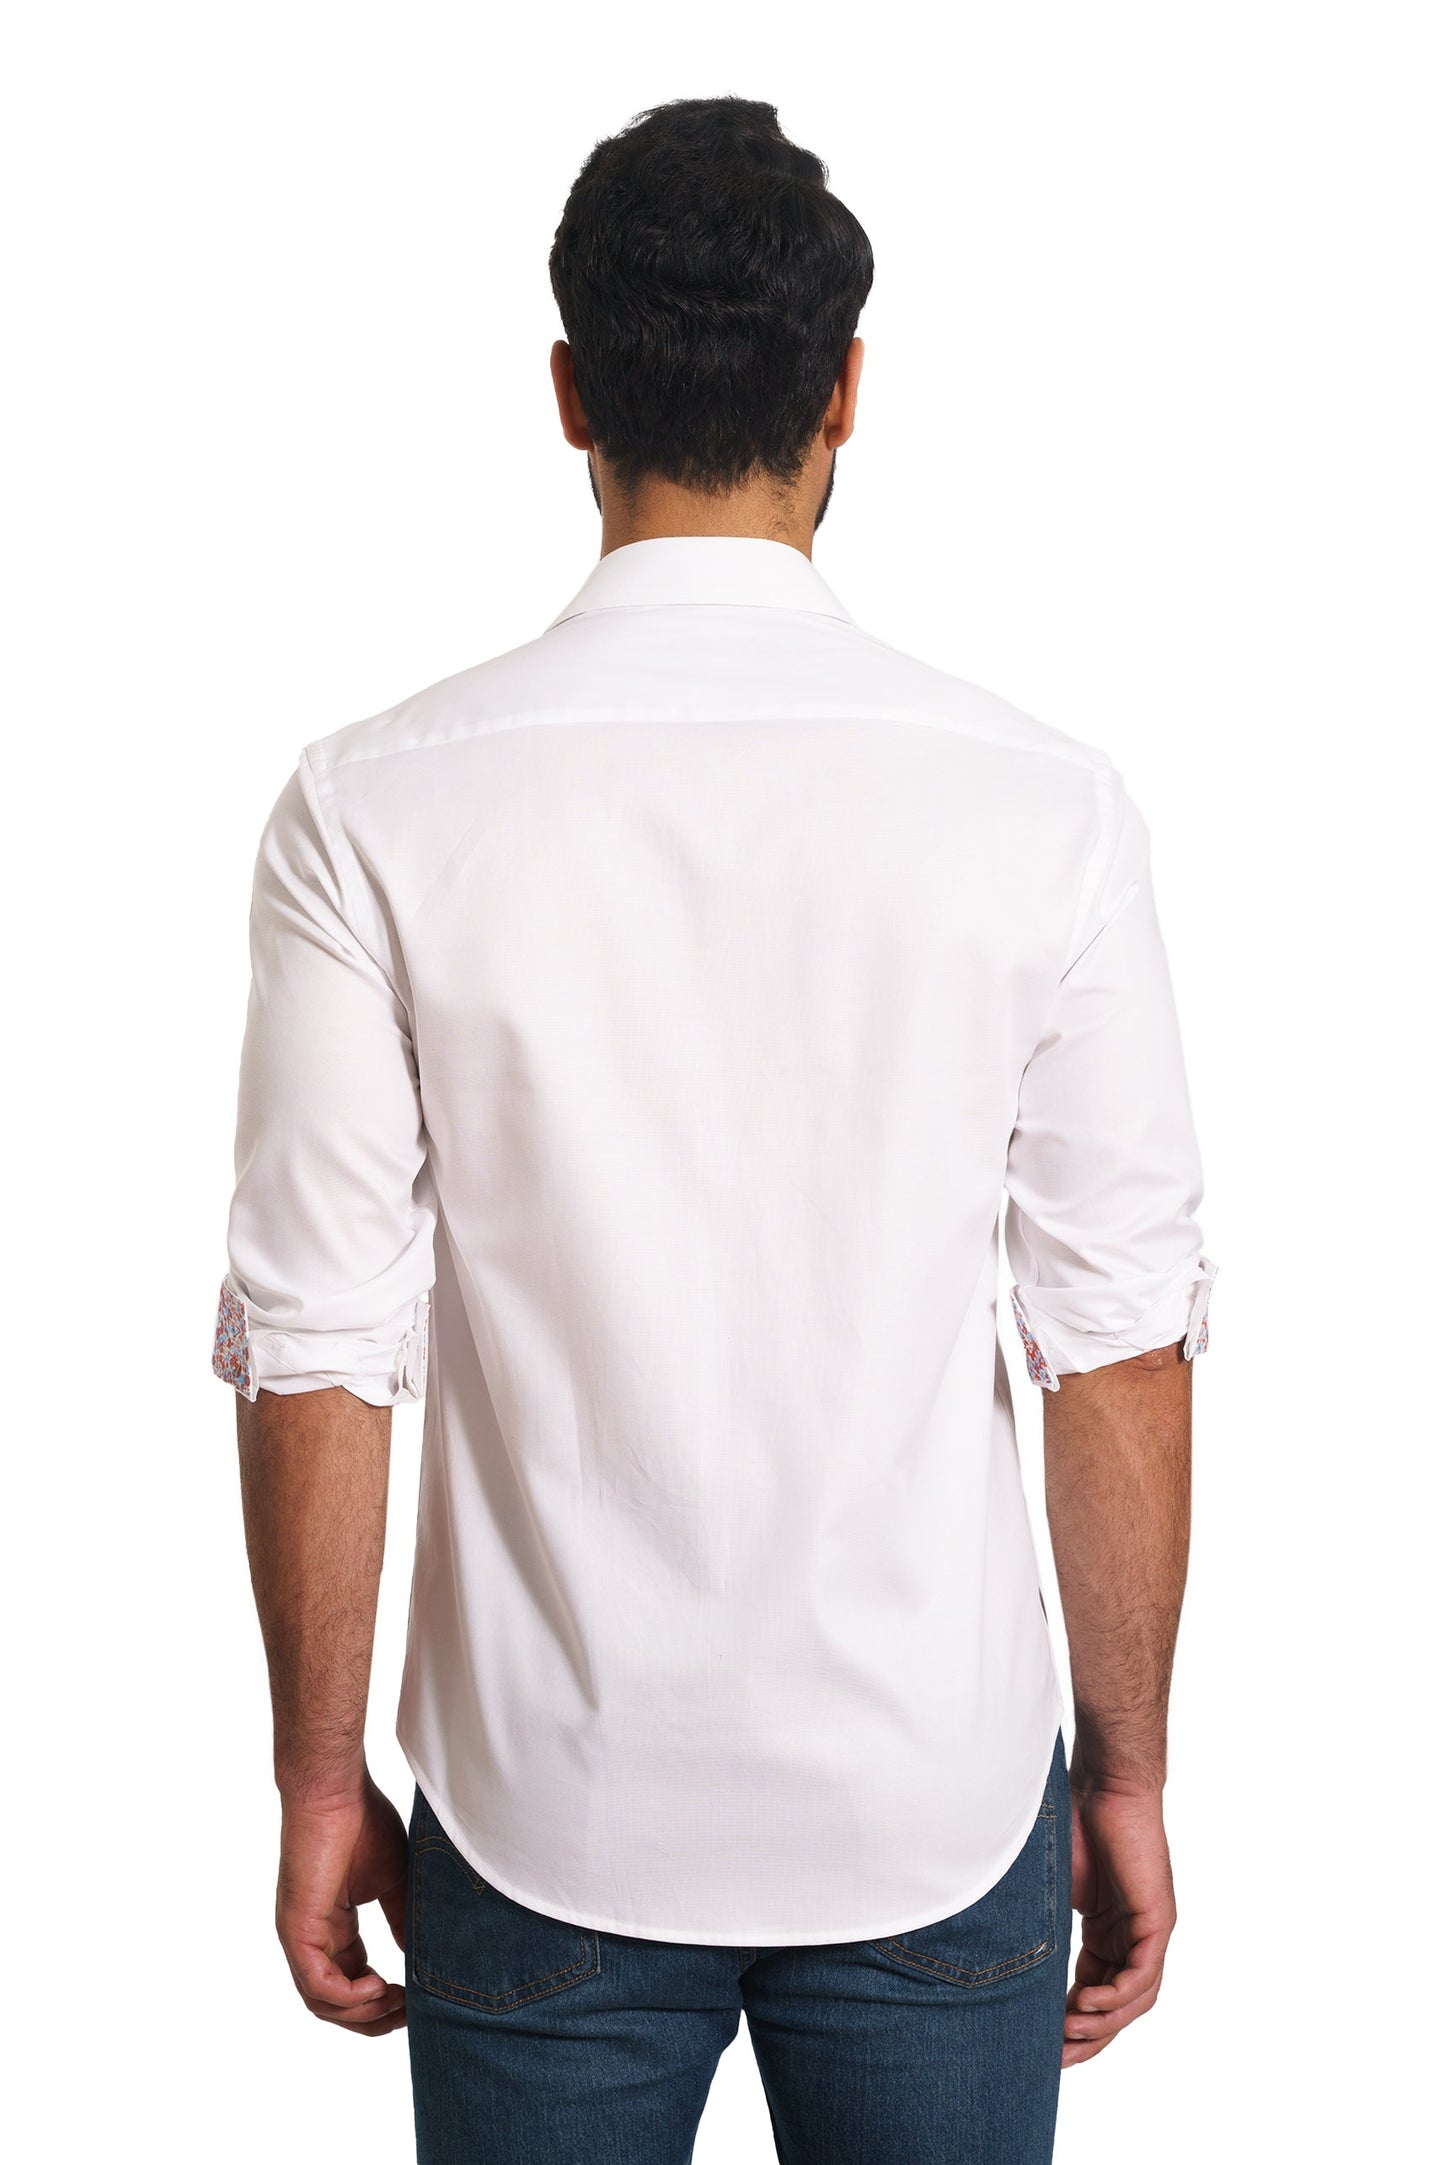 White Long Sleeve Shirt TP-7143 Back